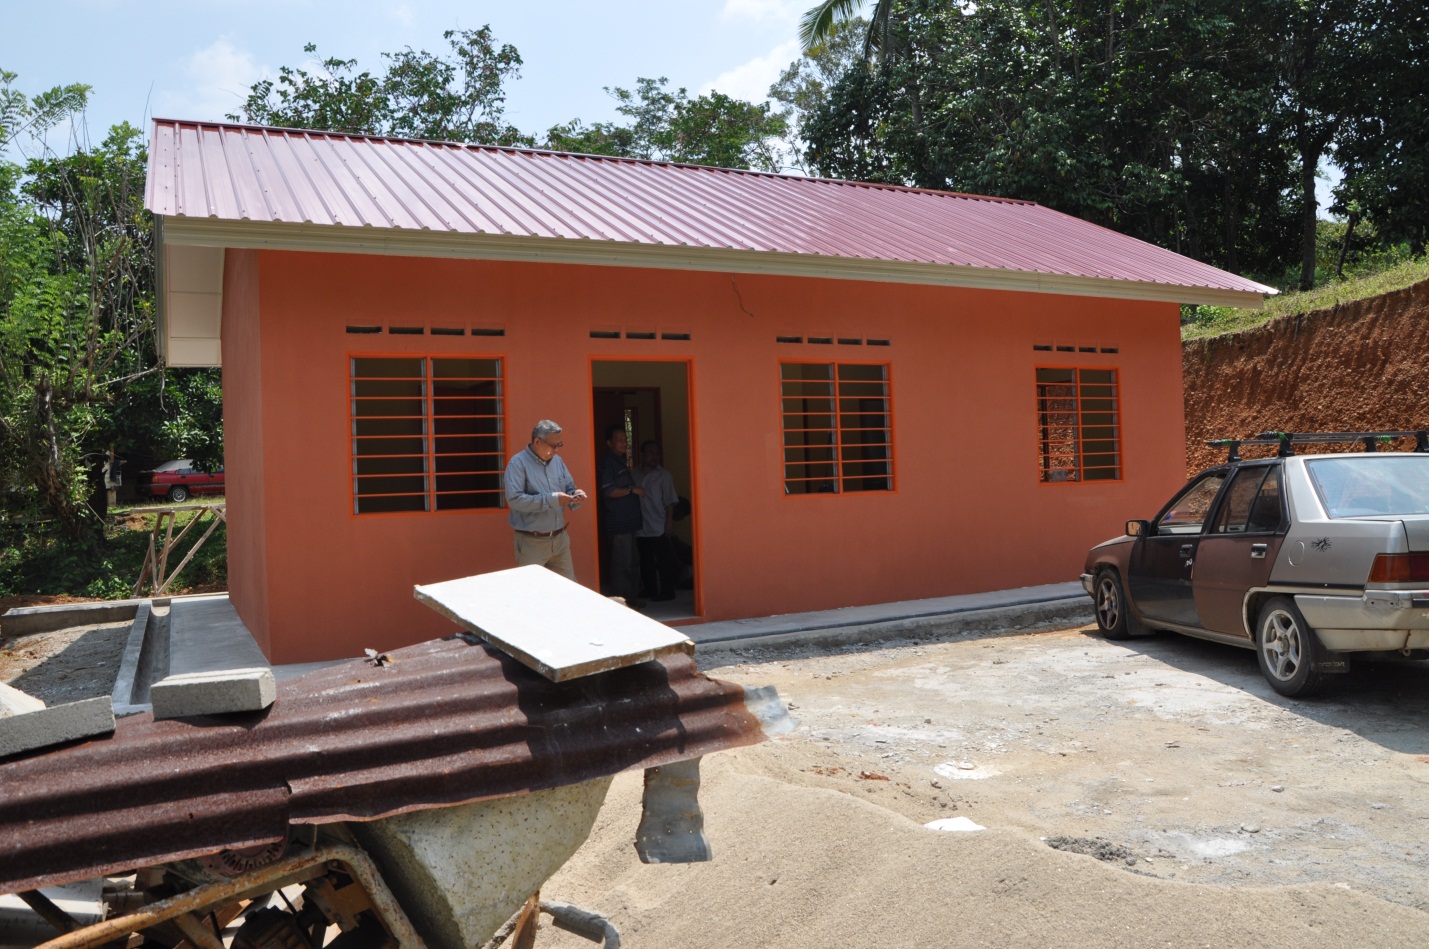 CONSTRUCTION OF THE KUALA LIPIS COMMUNITY HOMES PROGRAMME